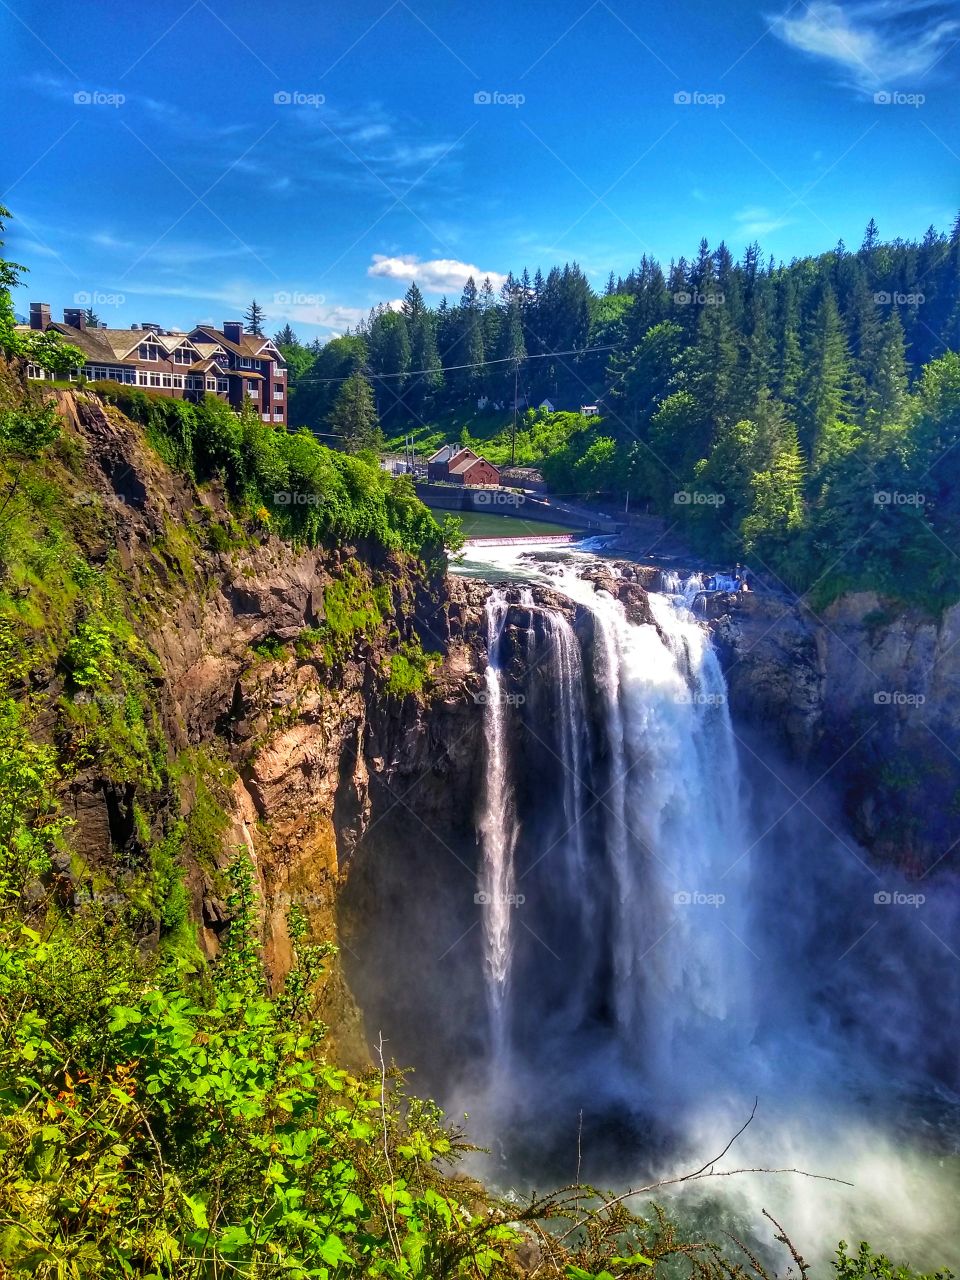 Snoqualmie falls, Seattle